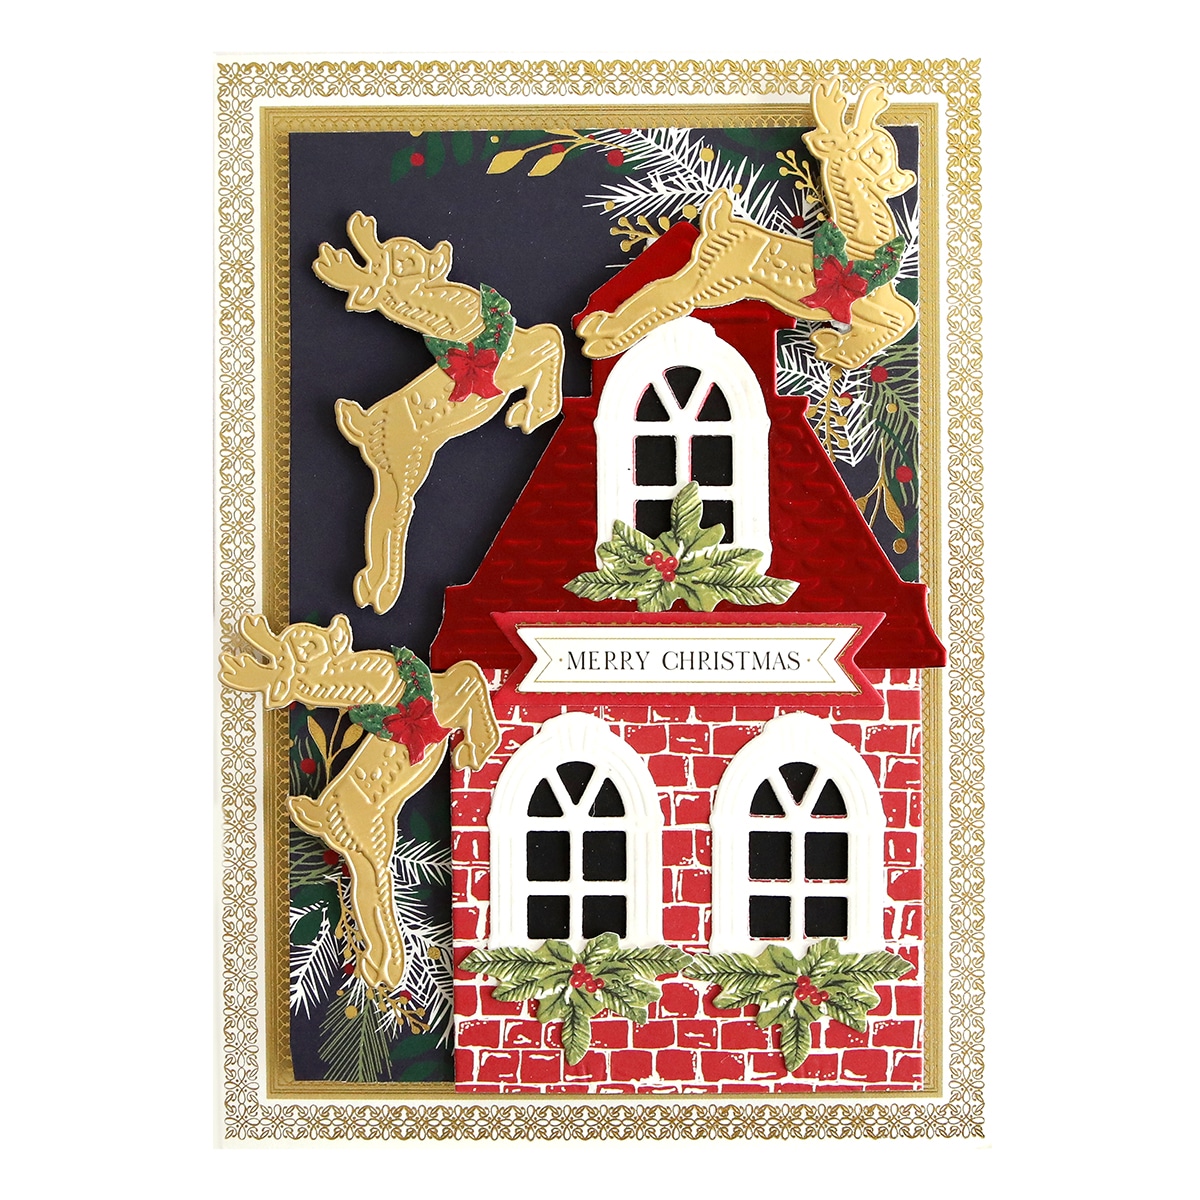 A christmas card with a christmas tree and reindeer.